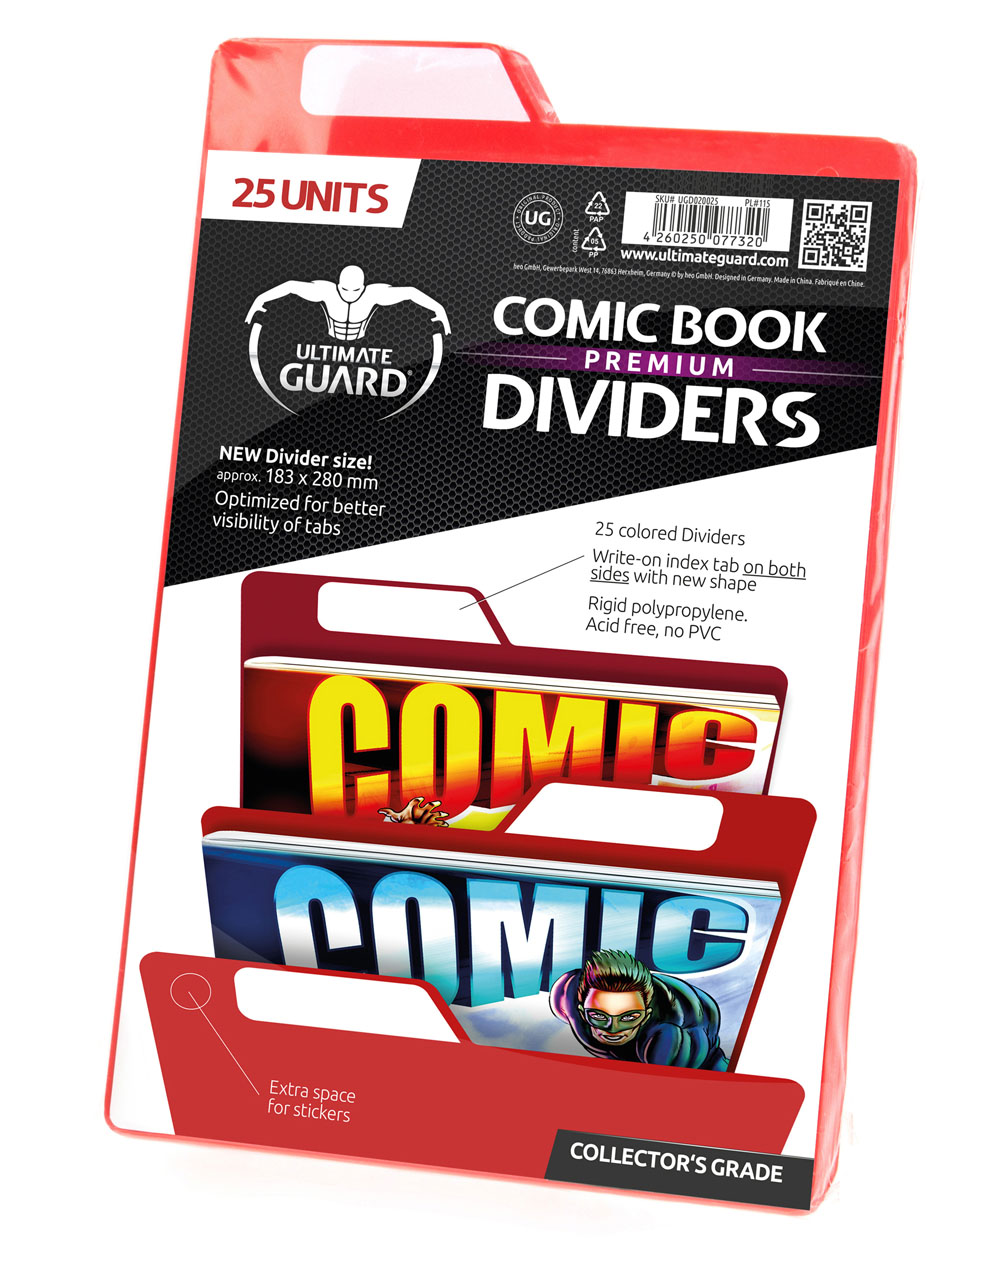 ULTIMATE GUARD 25 Intercalaires pour Comics Premium Comic Book Dividers Rouge